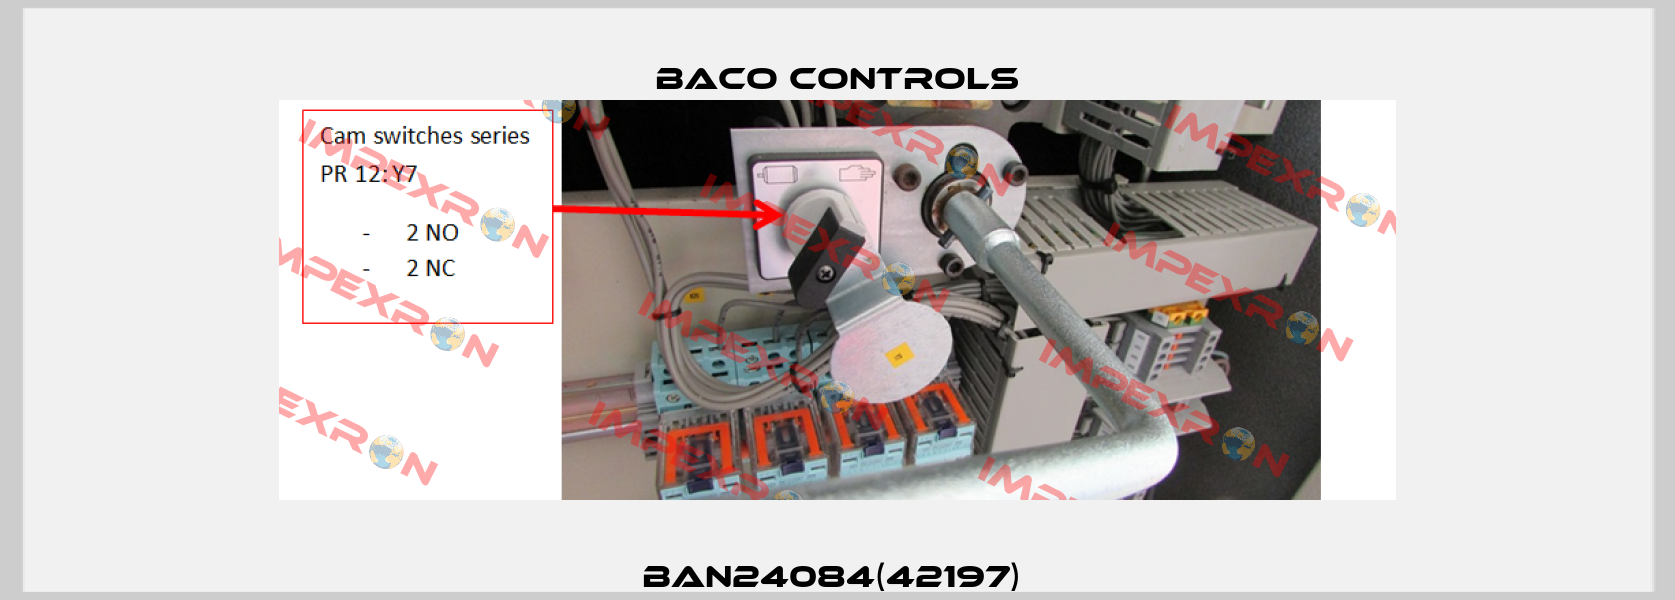 BAN24084(42197)  Baco Controls